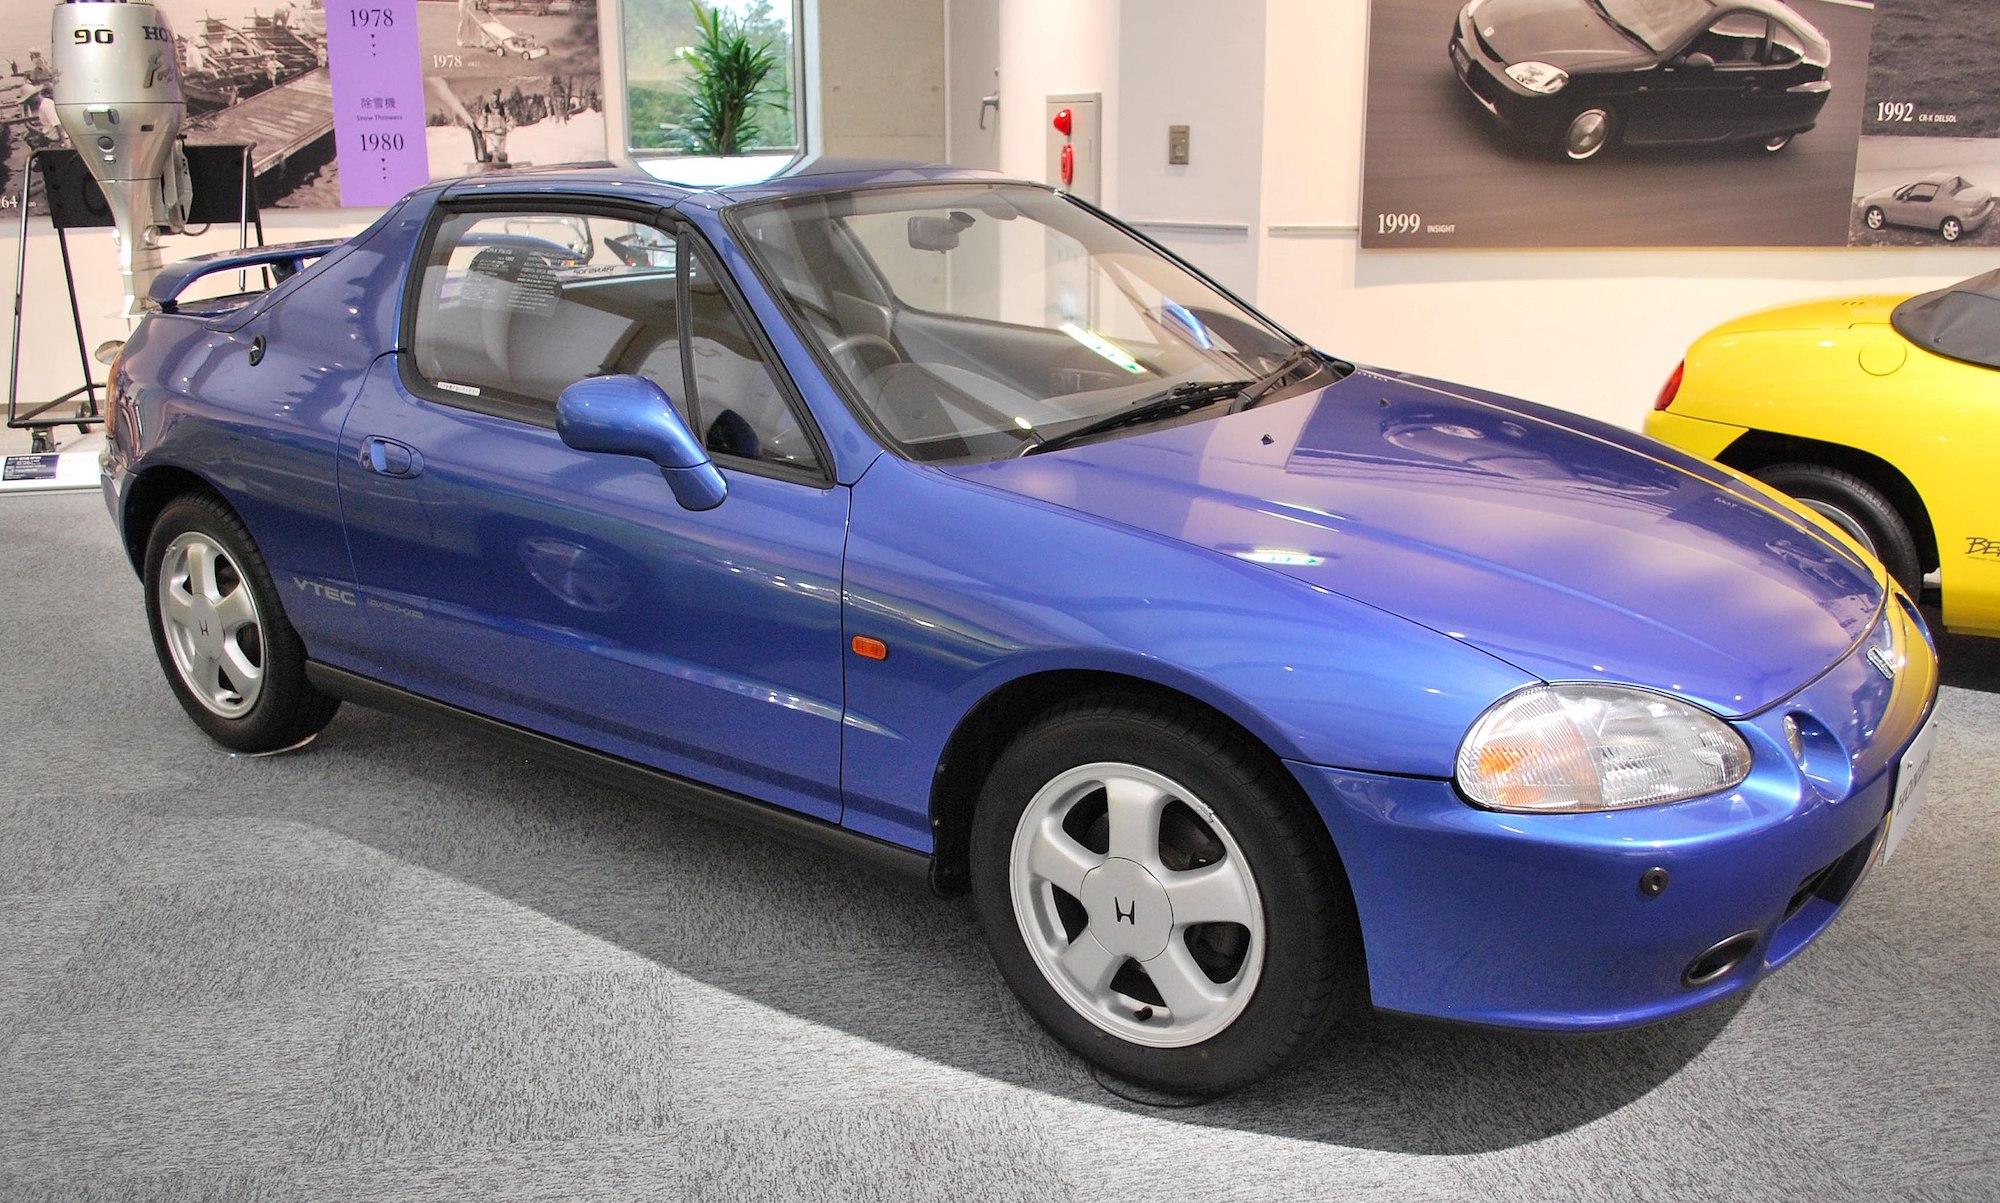 1995 Honda Del Sol on display in blue